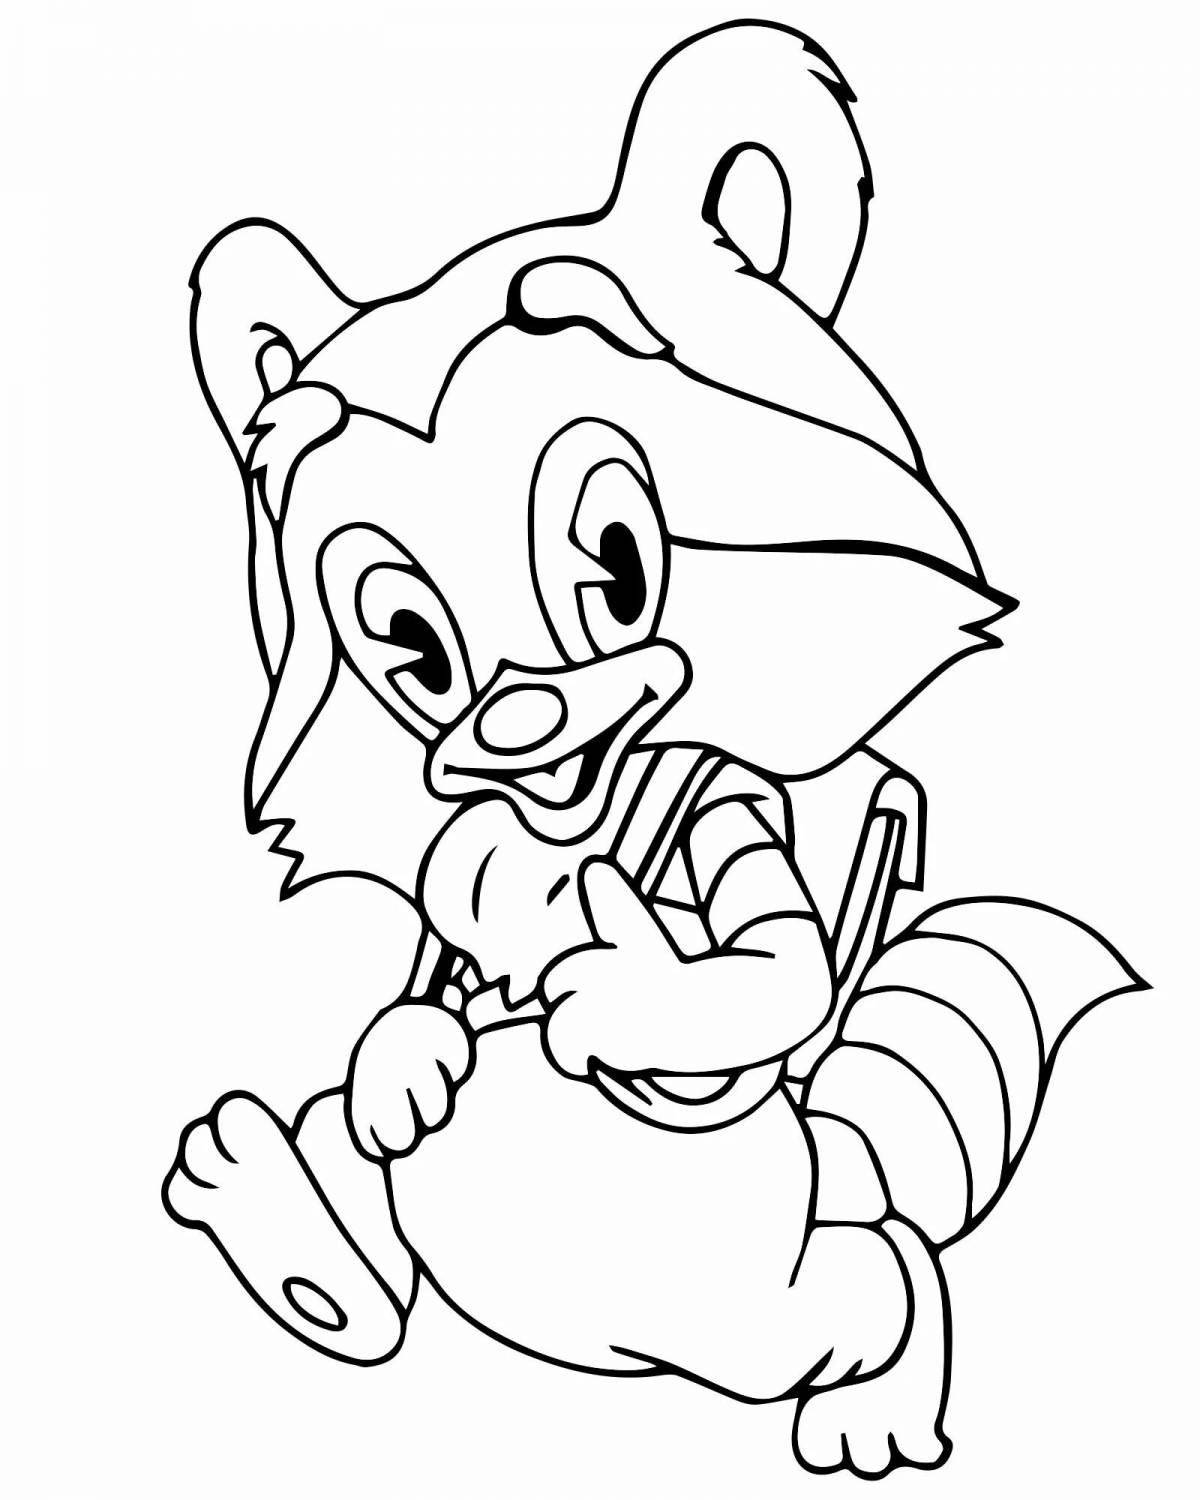 Adorable cartoon raccoon coloring book for kids